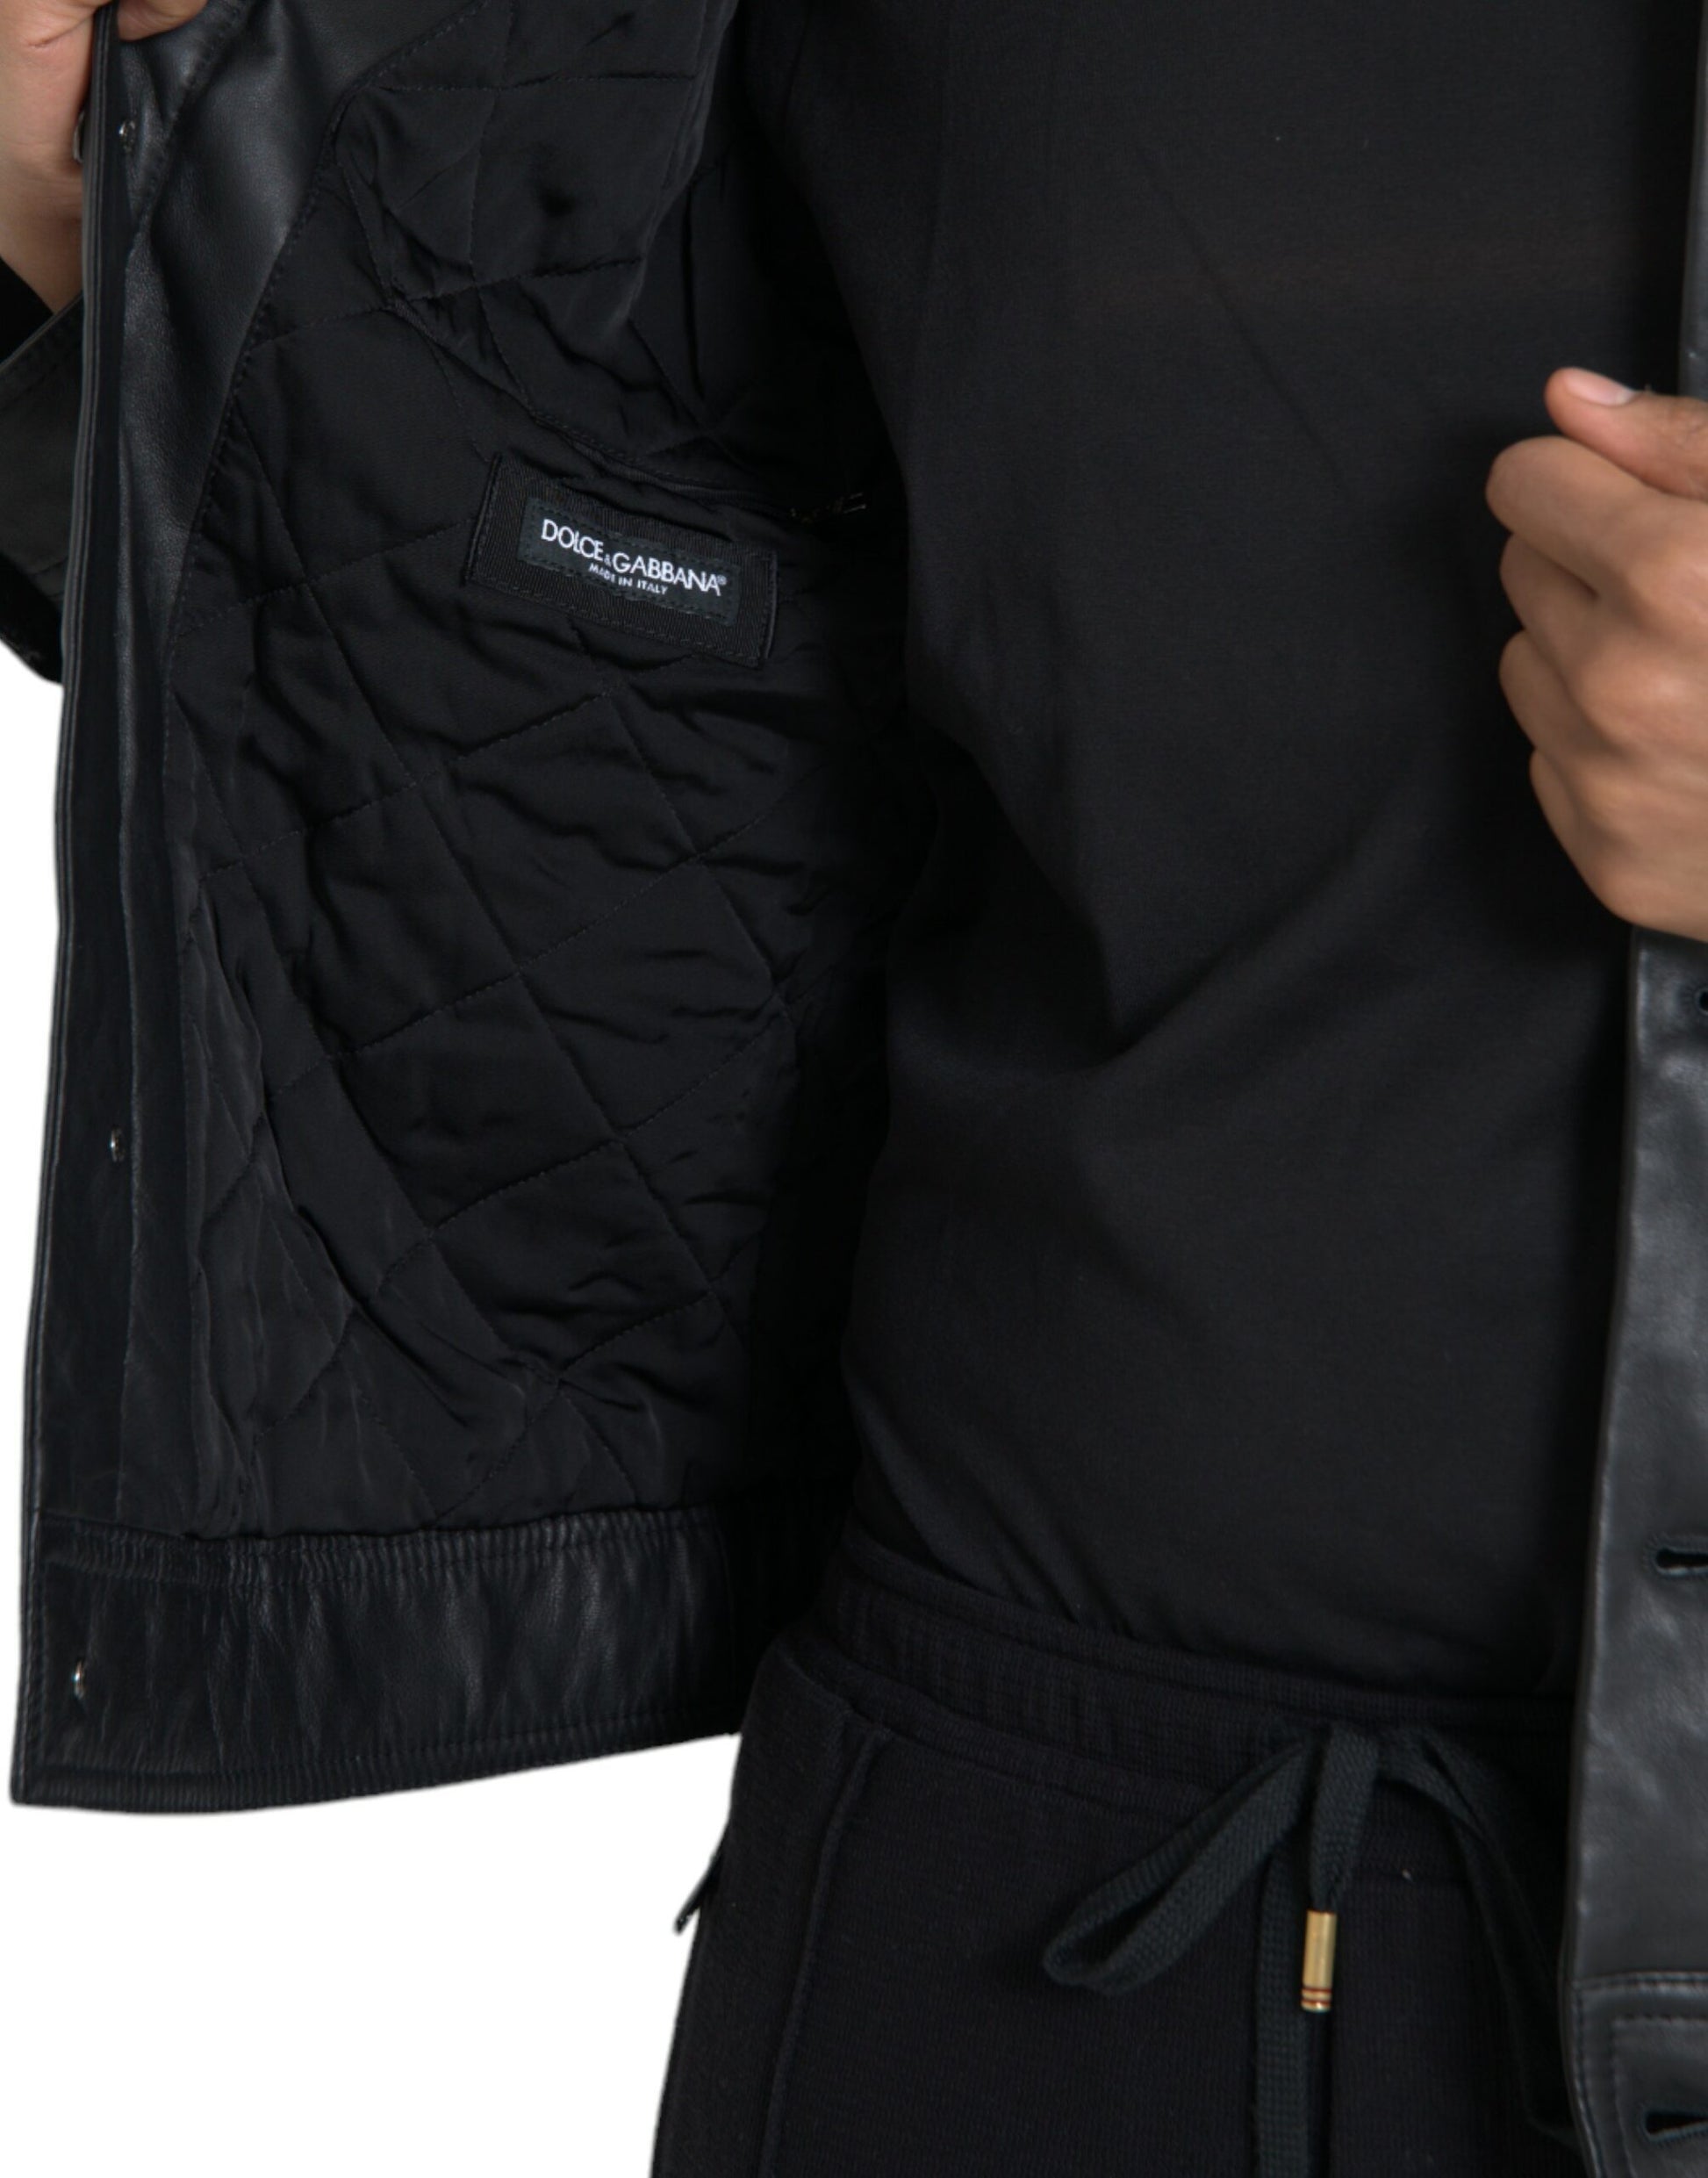 Dolce & Gabbana Black Leather Fur Collar Biker Coat Jacket - Gio Beverly Hills